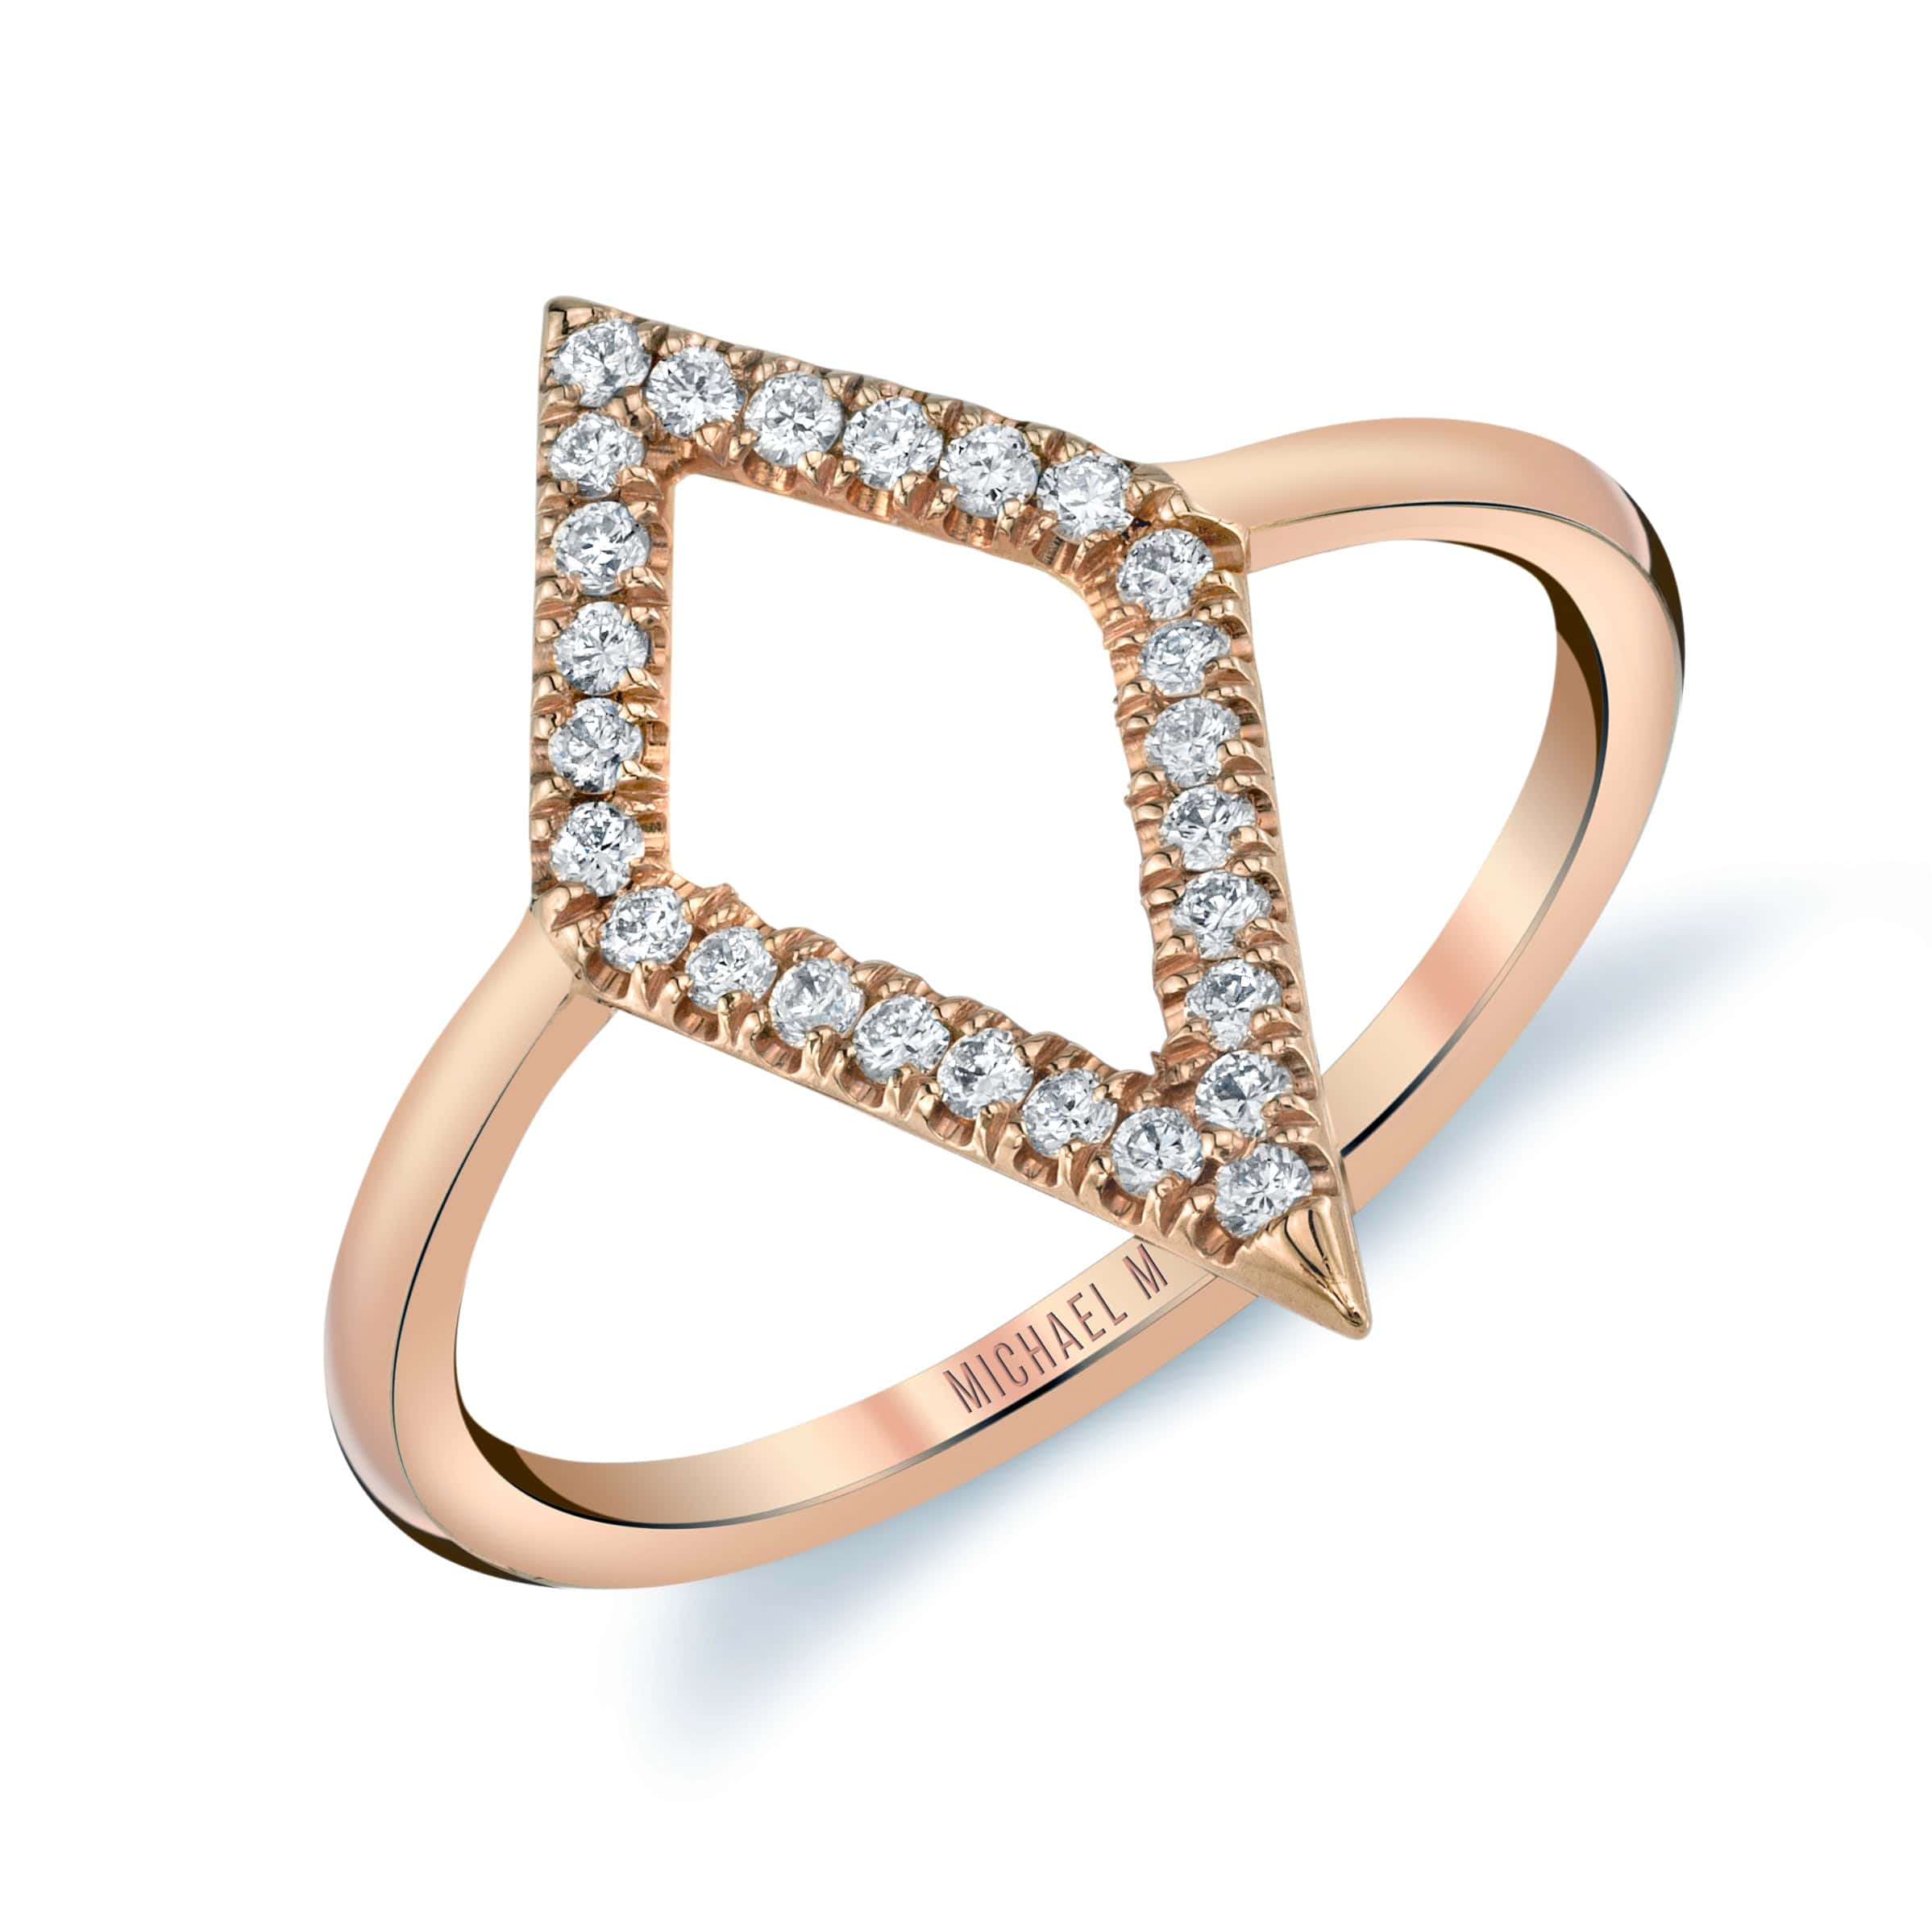 MICHAEL M Fashion Rings 14K Rose Gold / 4 Diamond Narrow Kite Ring F302-RG4